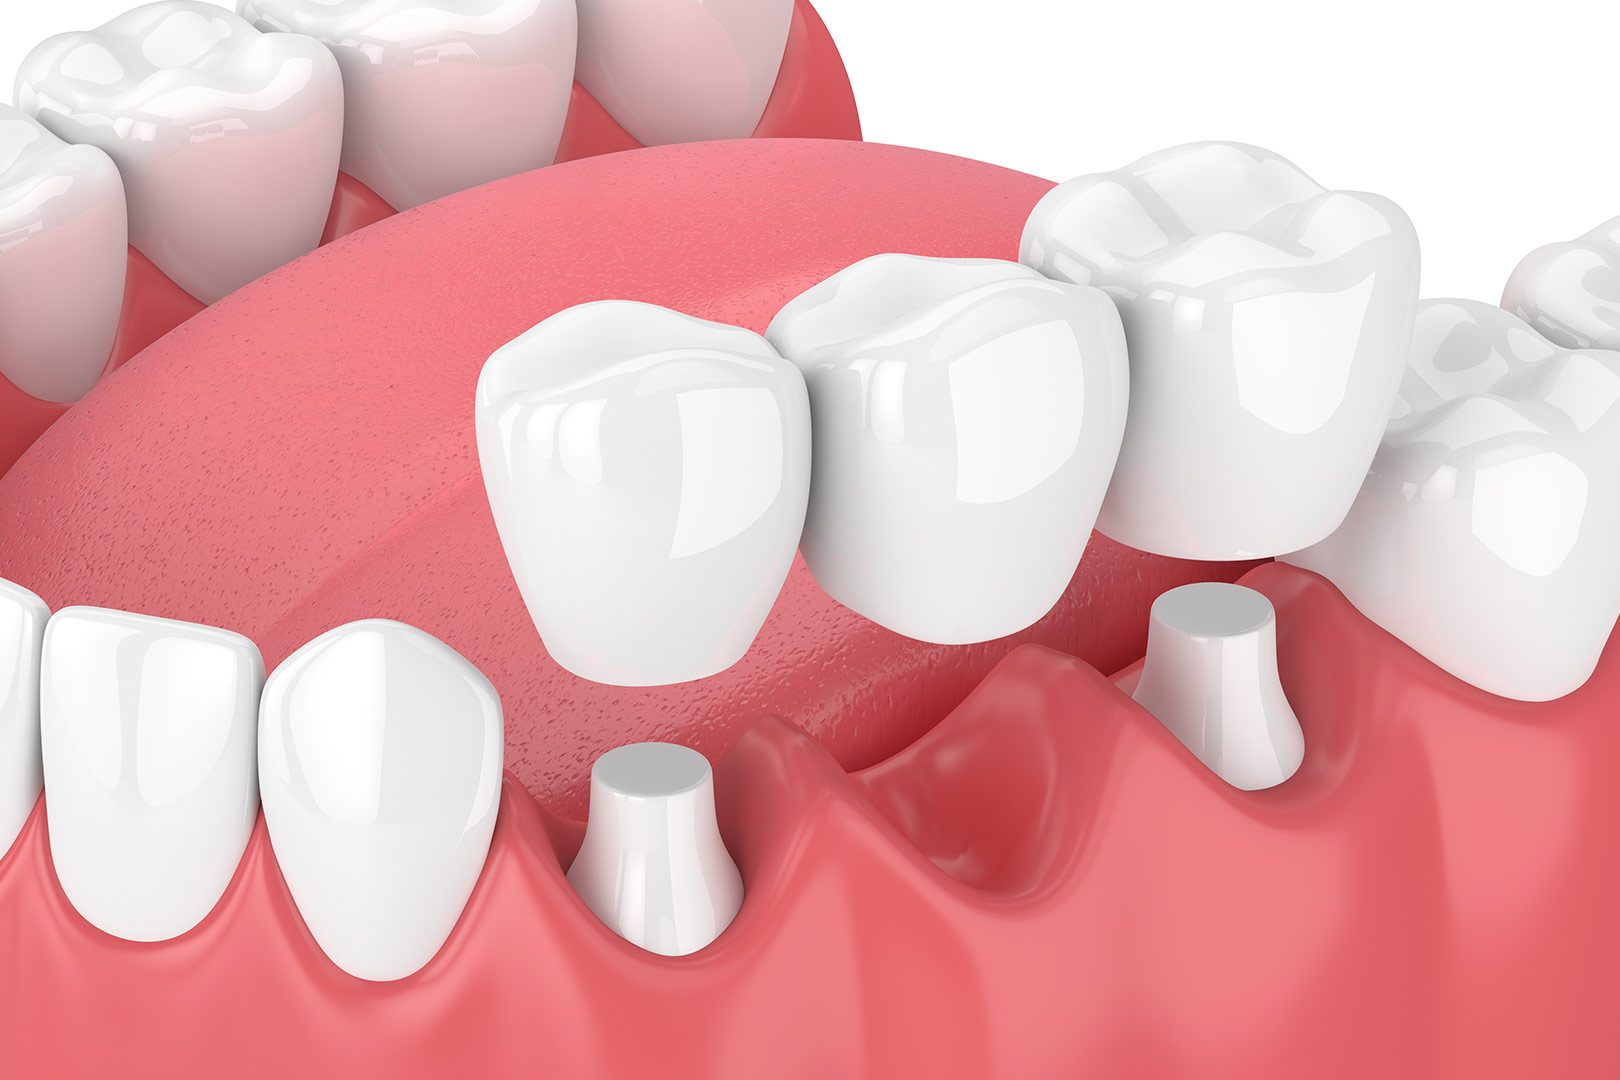 Restorative dentistry treatments | Prairie Dental | General & Family Dentist | Leduc, AB